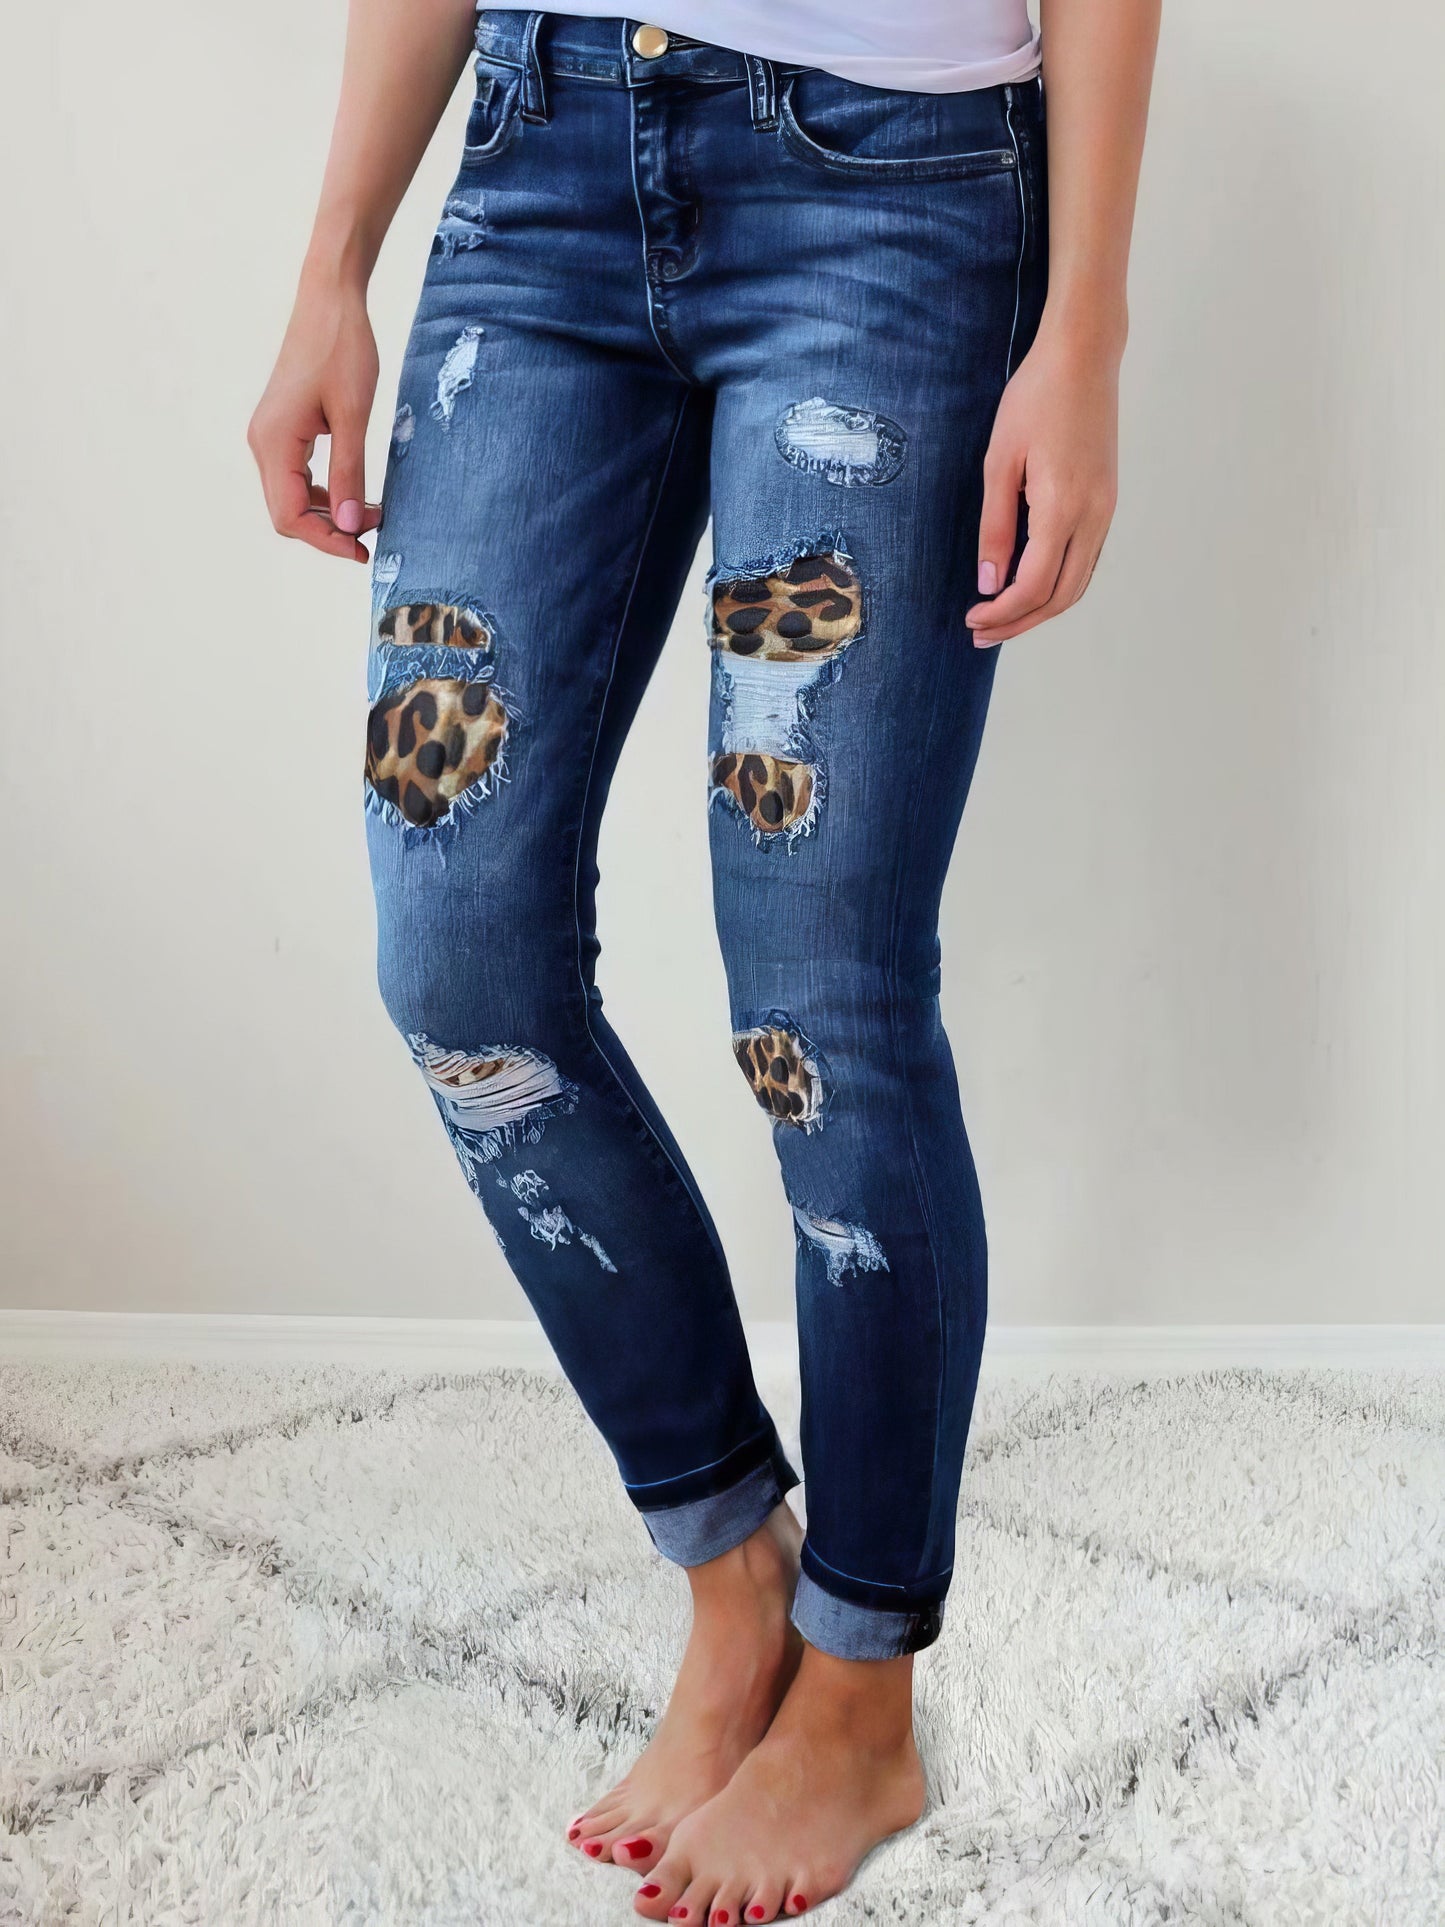 Jeans - Skinny Leopard Print Ripped Stretch Jeans - MsDressly